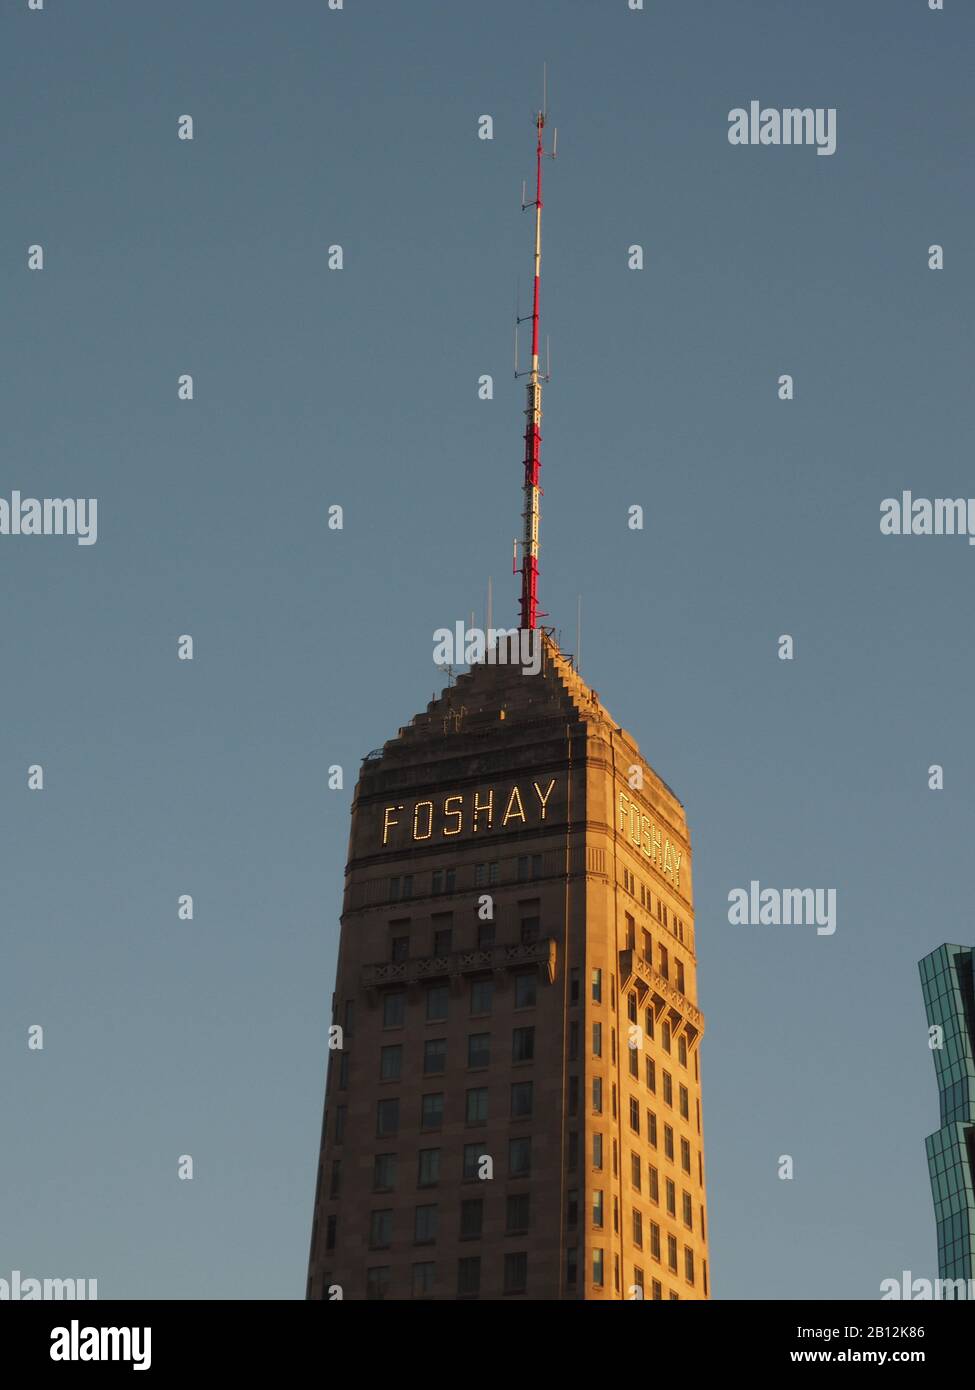 The Foshay Building in Minneapolis, Minnesota, USA with its name illuminated Stock Photo